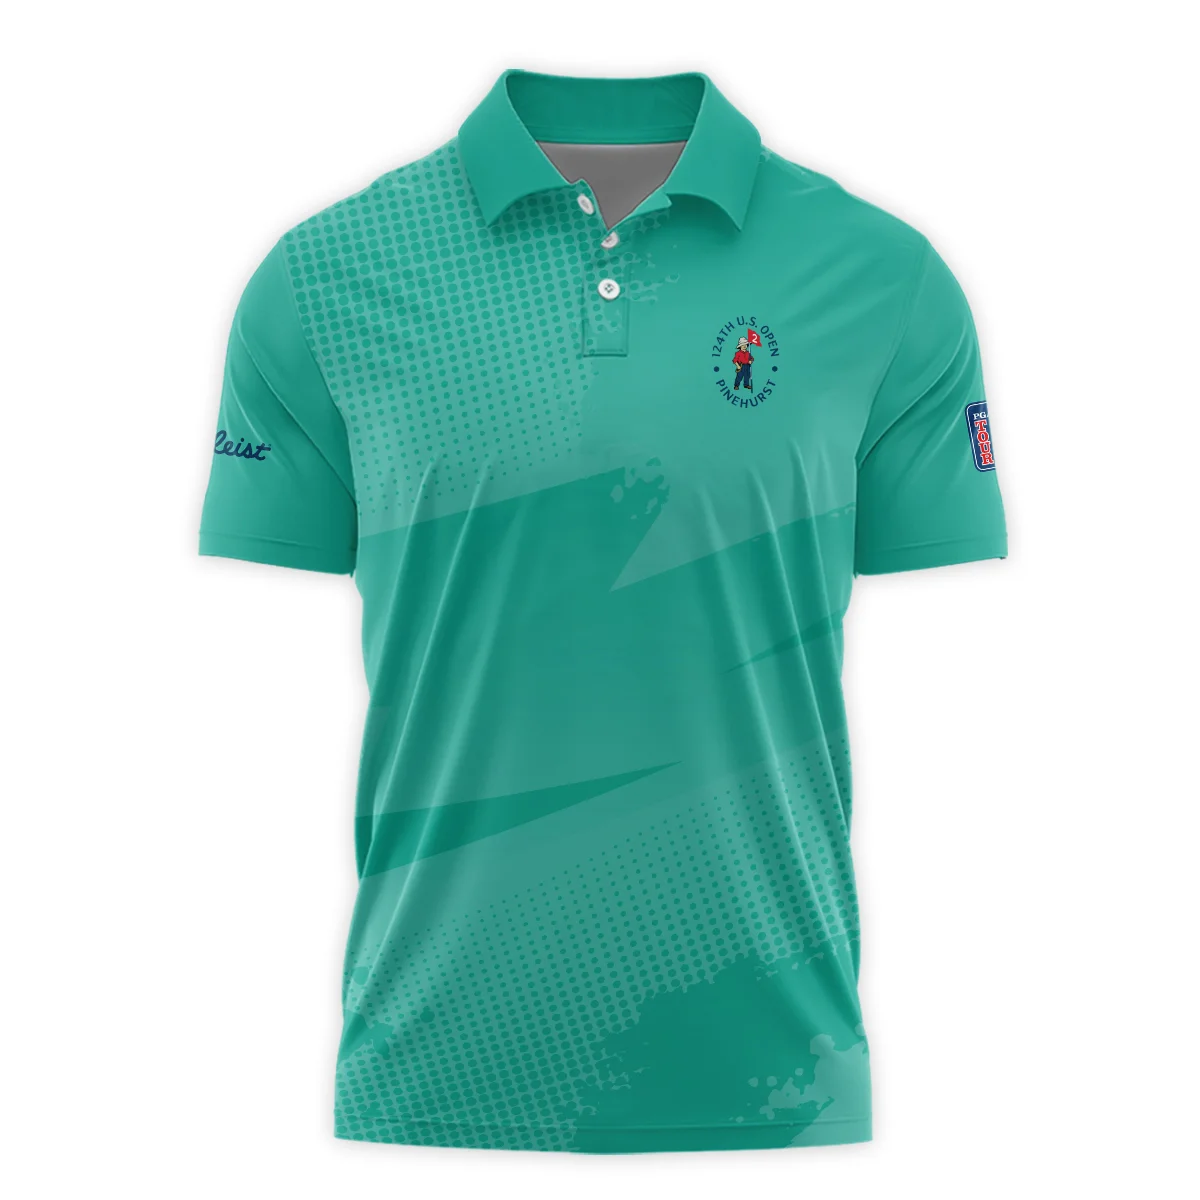 Golf Sport Pattern Green Mix Color 124th U.S. Open Pinehurst Ping Zipper Polo Shirt Style Classic